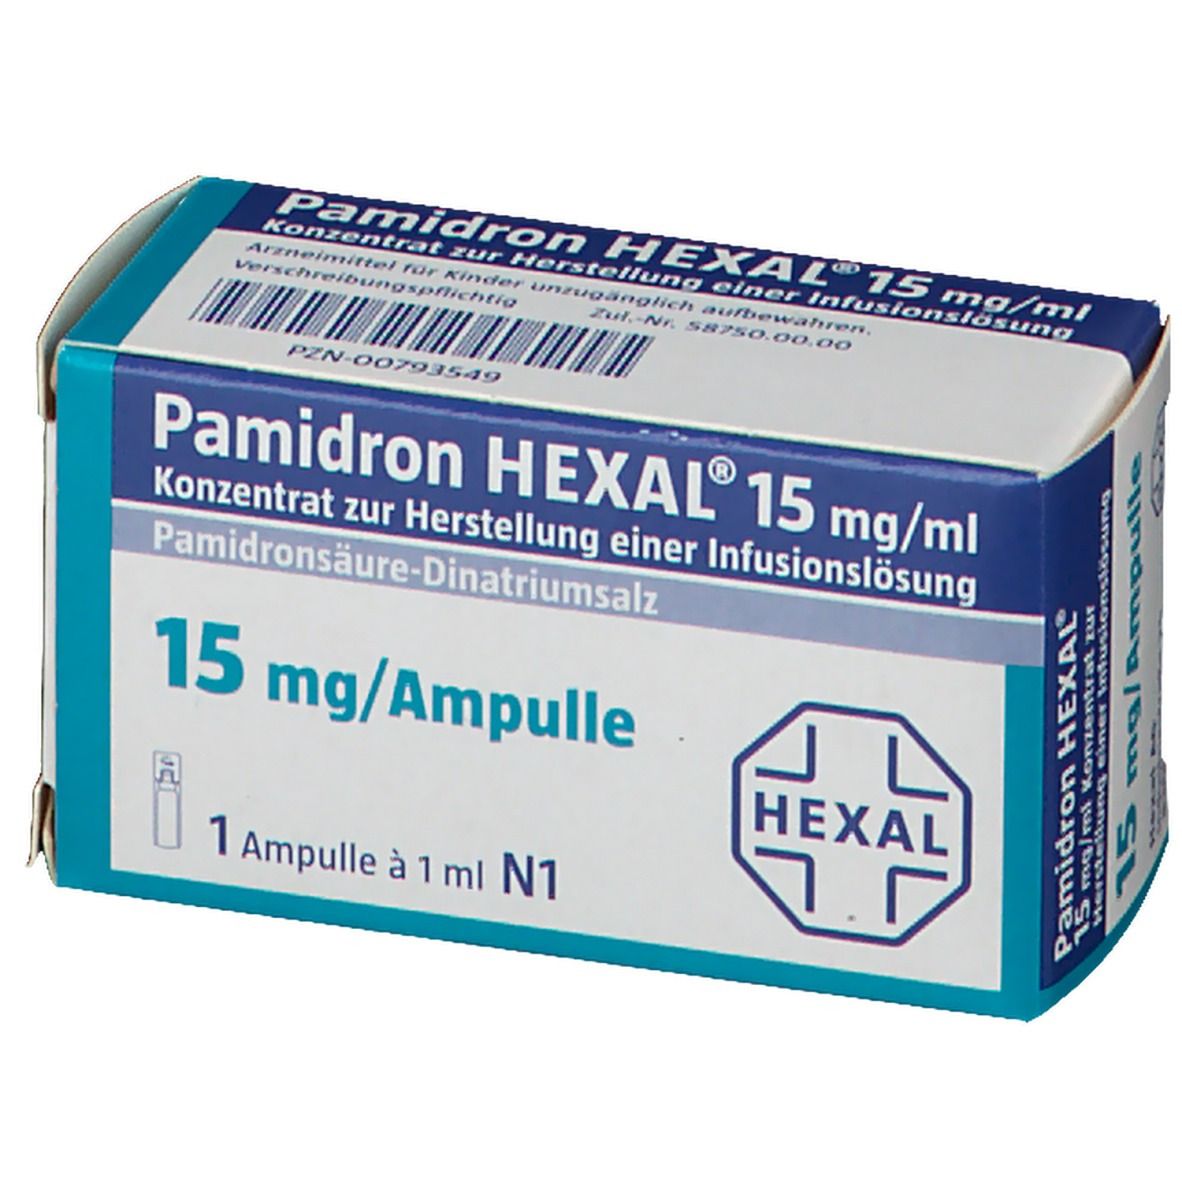 Pamidron HEXAL® 15 mg/ml